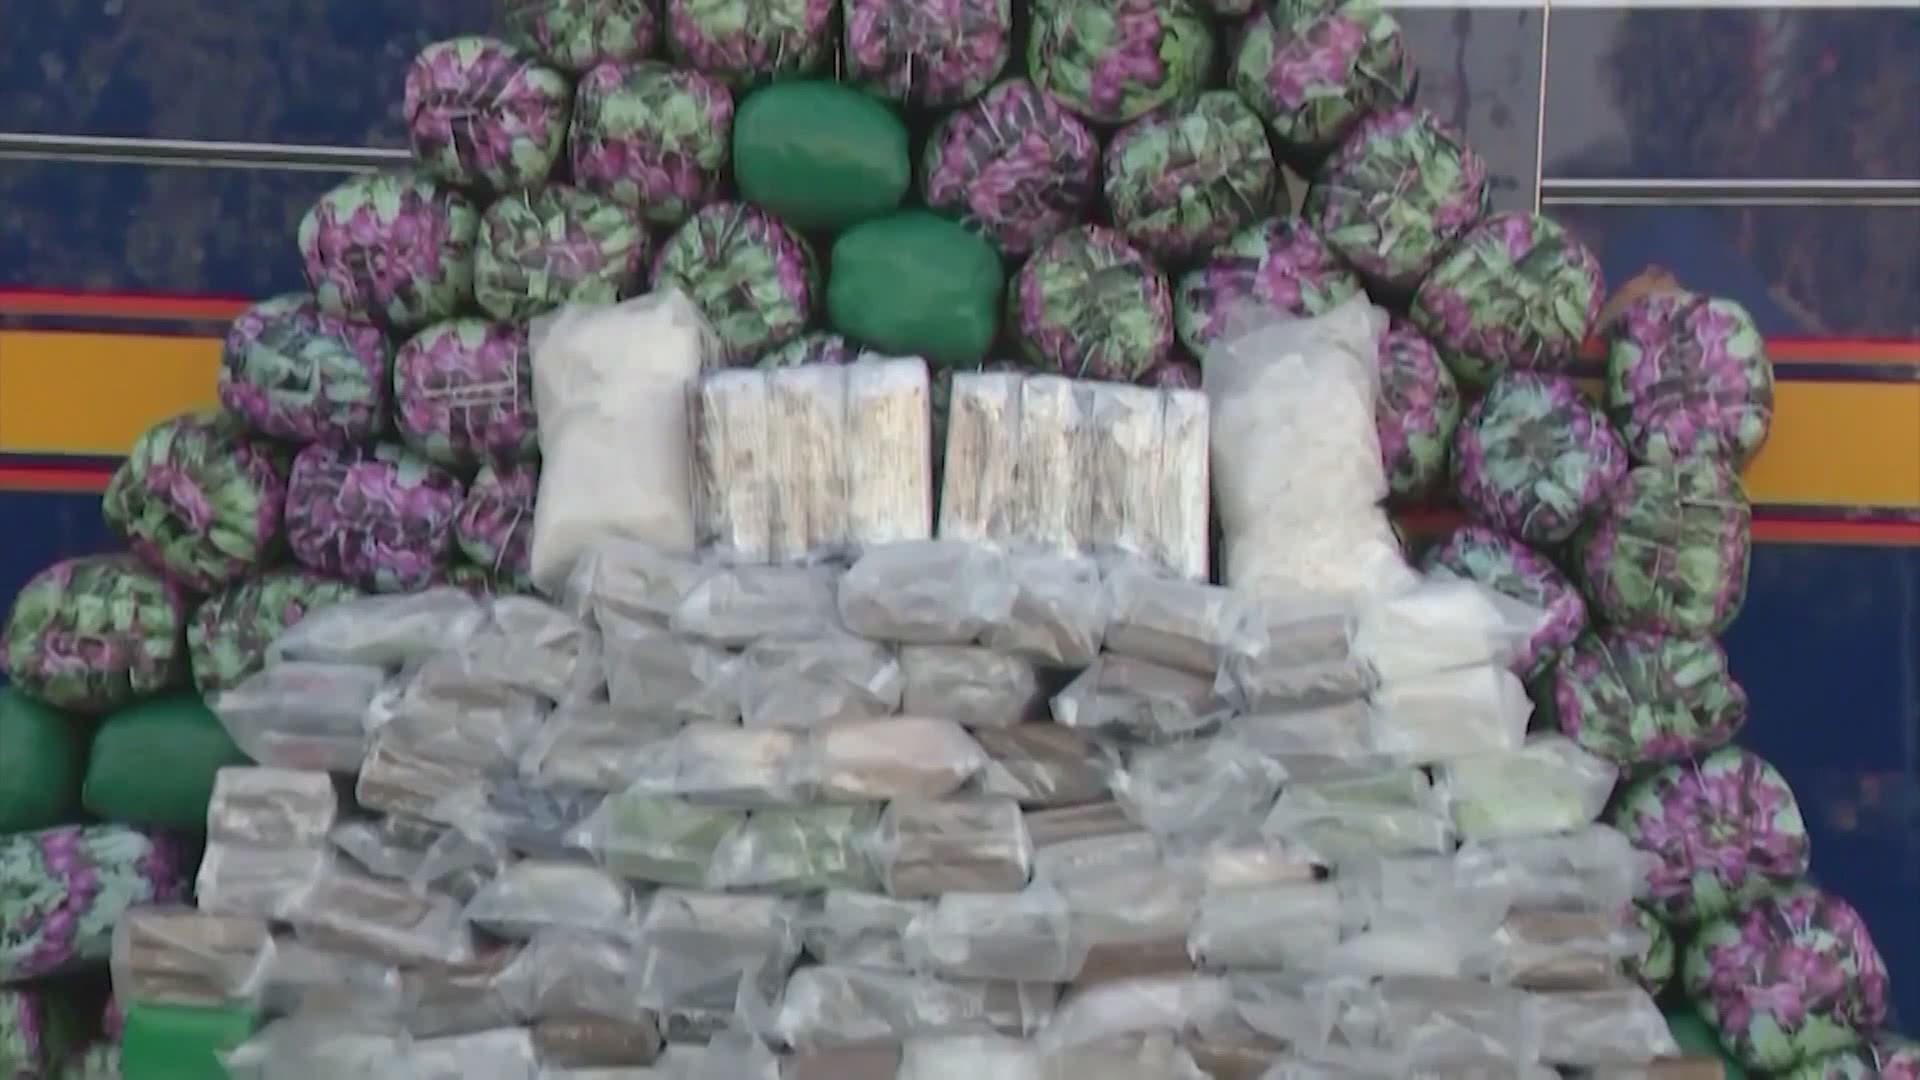 fentanyl seized at the U.S.-Mexico border